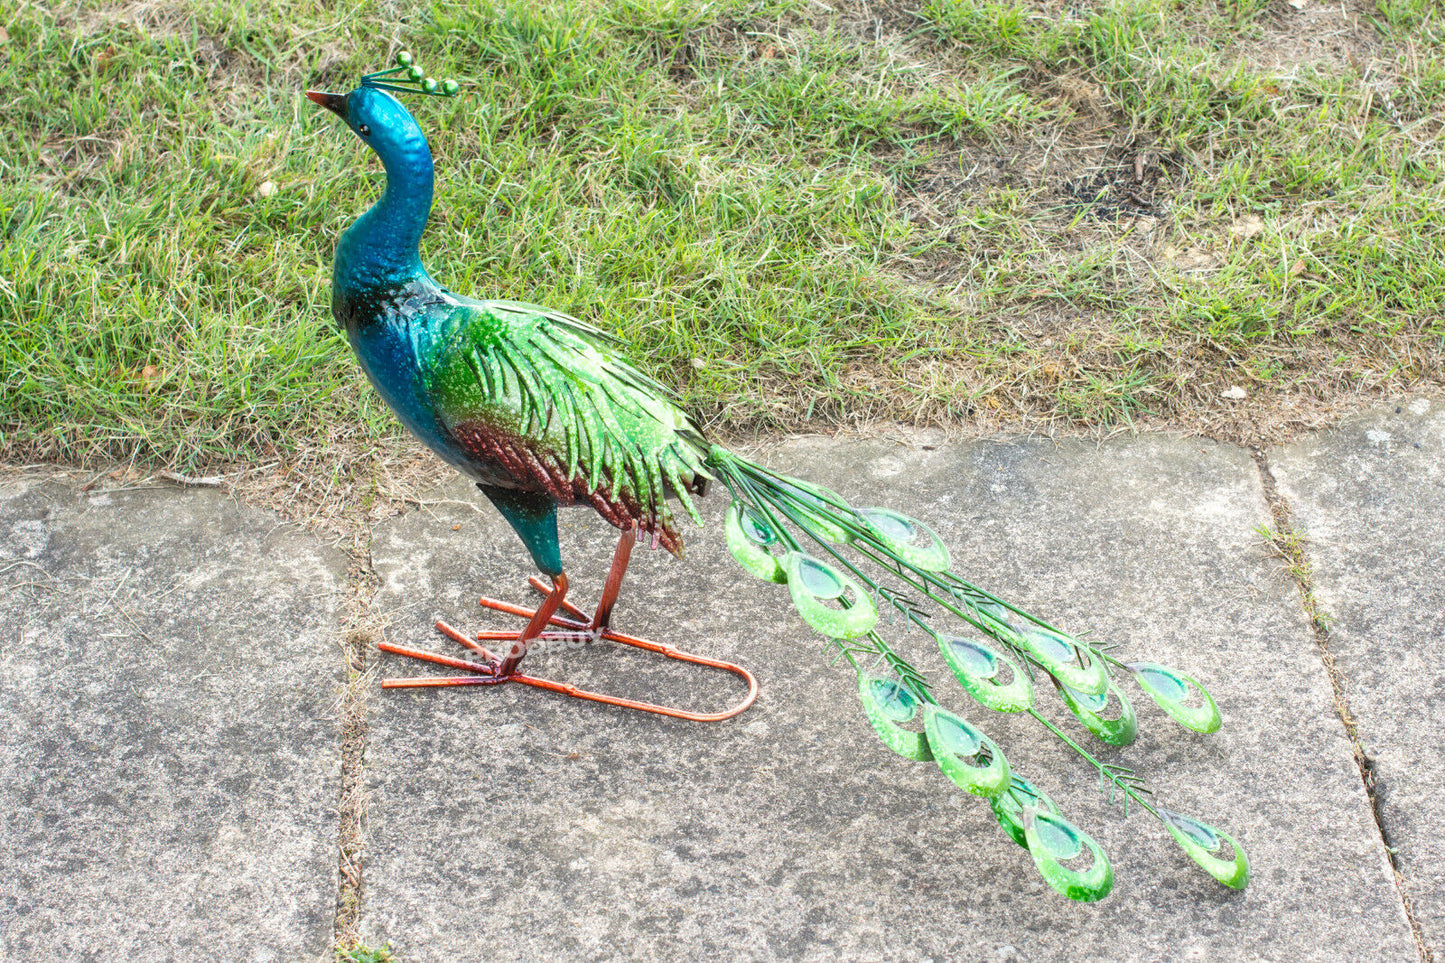 Large Exotic Peacock Metal Garden Ornament